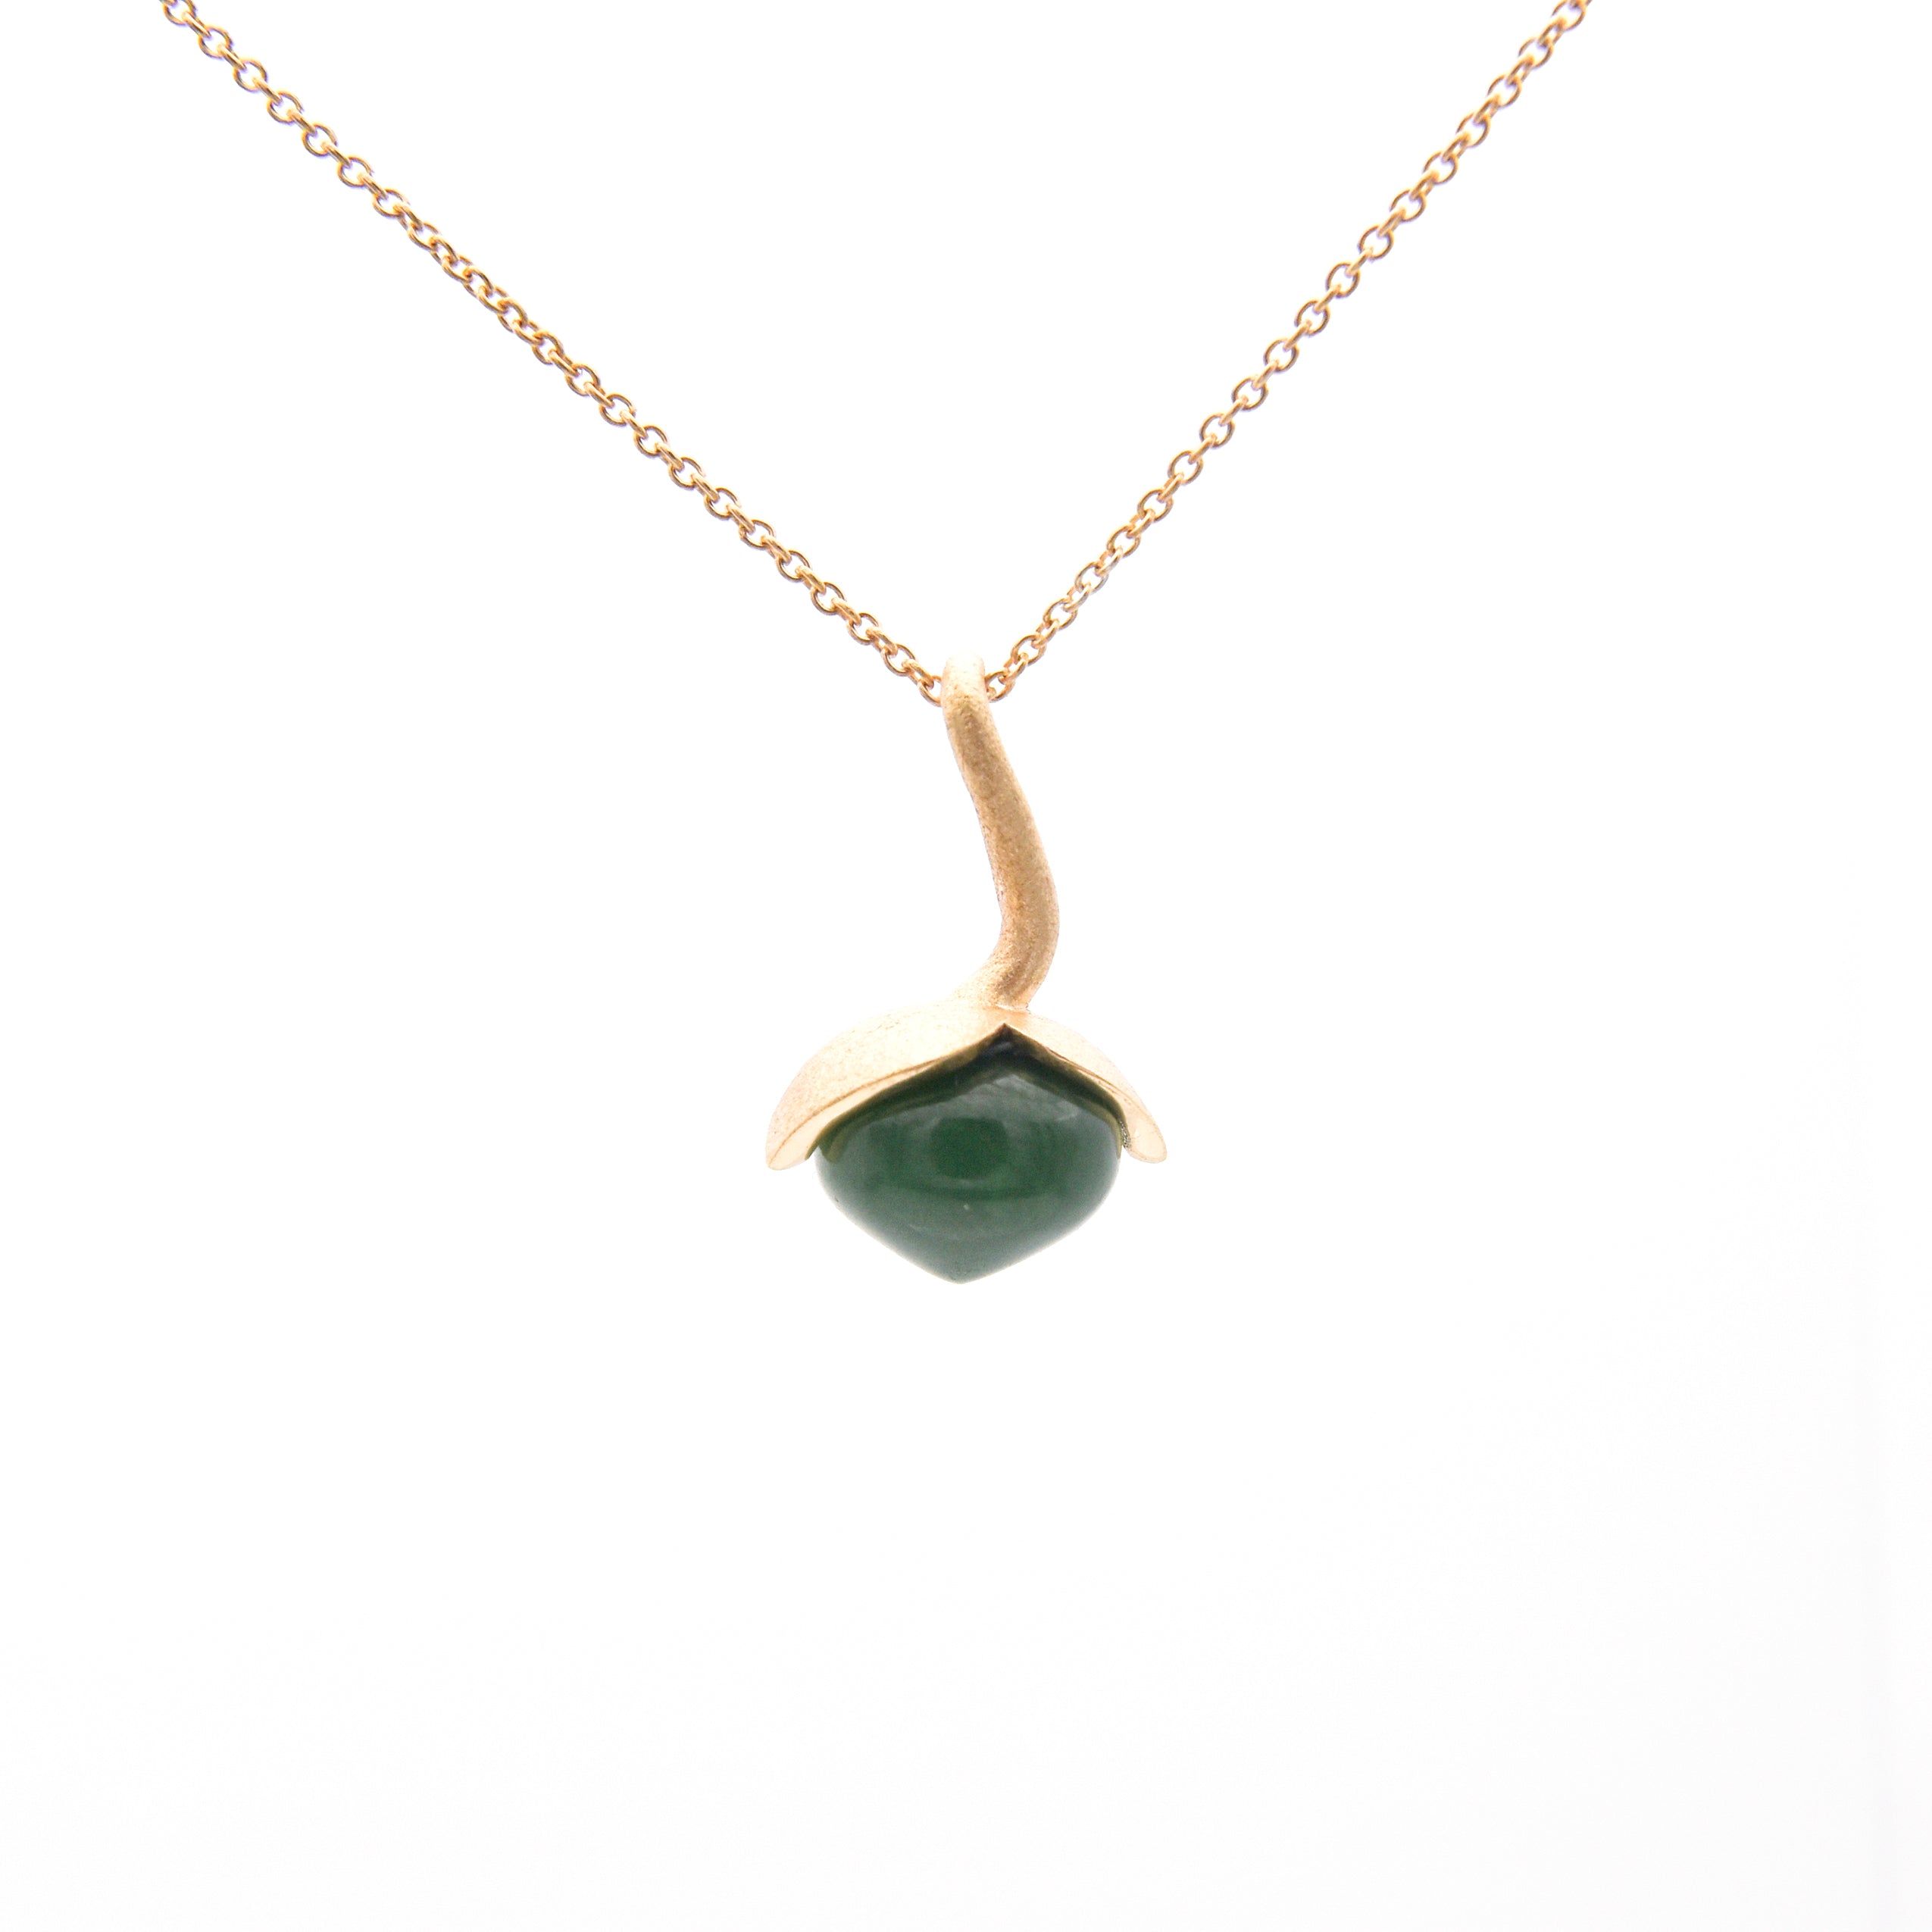 Dolce pendant "medium" with jade 925/-